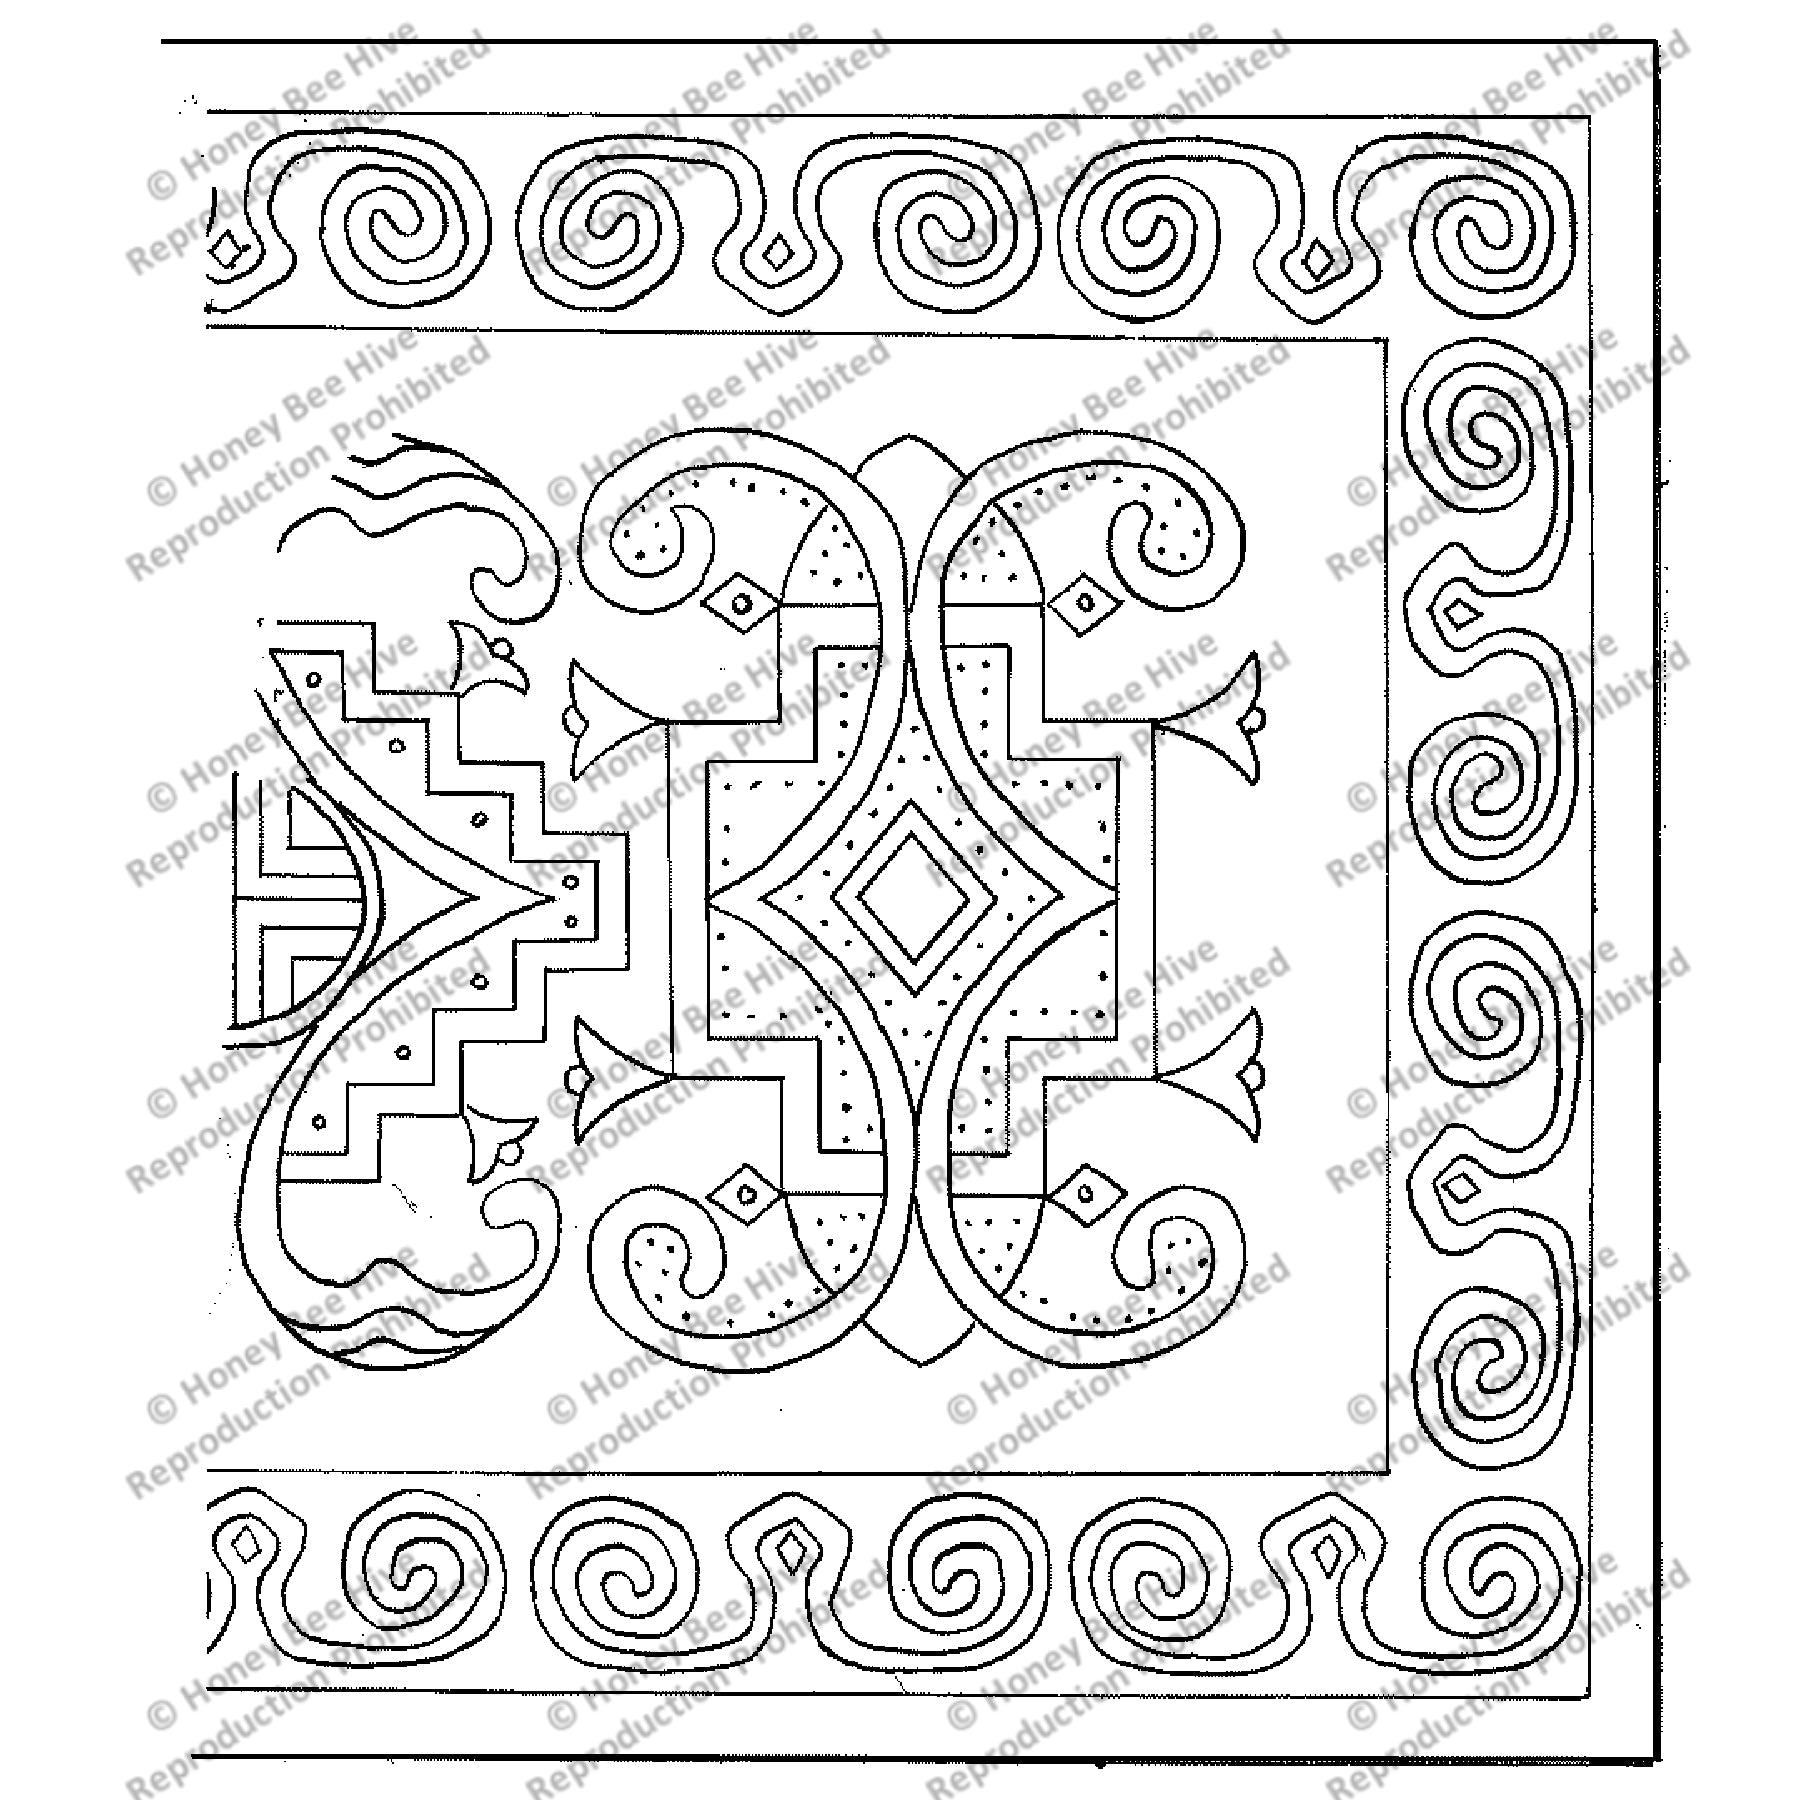 Micmac, rug hooking pattern